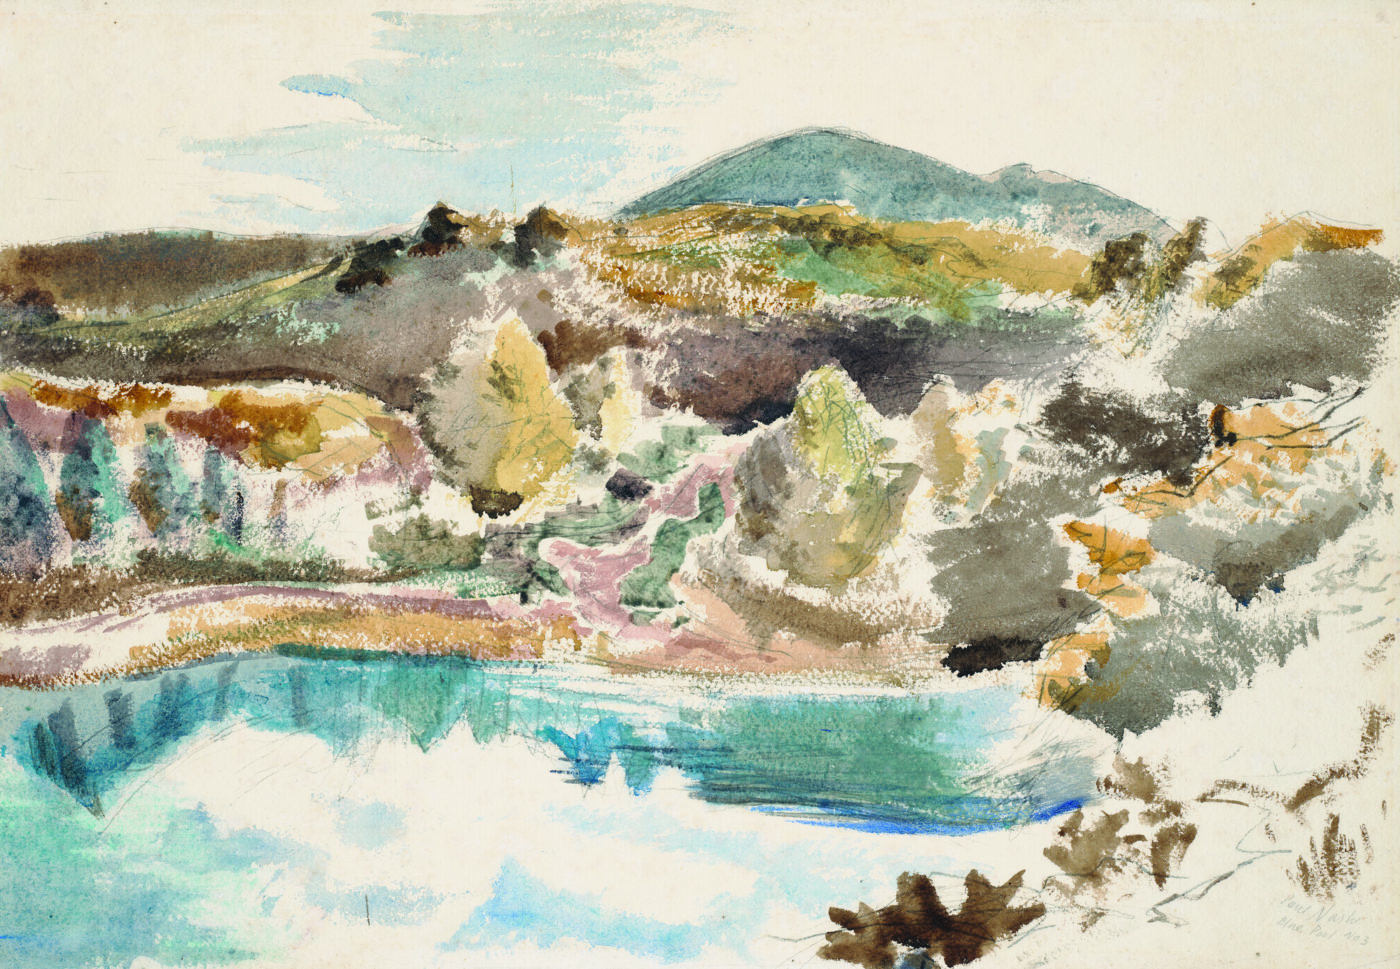 Paul Nash (1889-1946), The Blue Pool